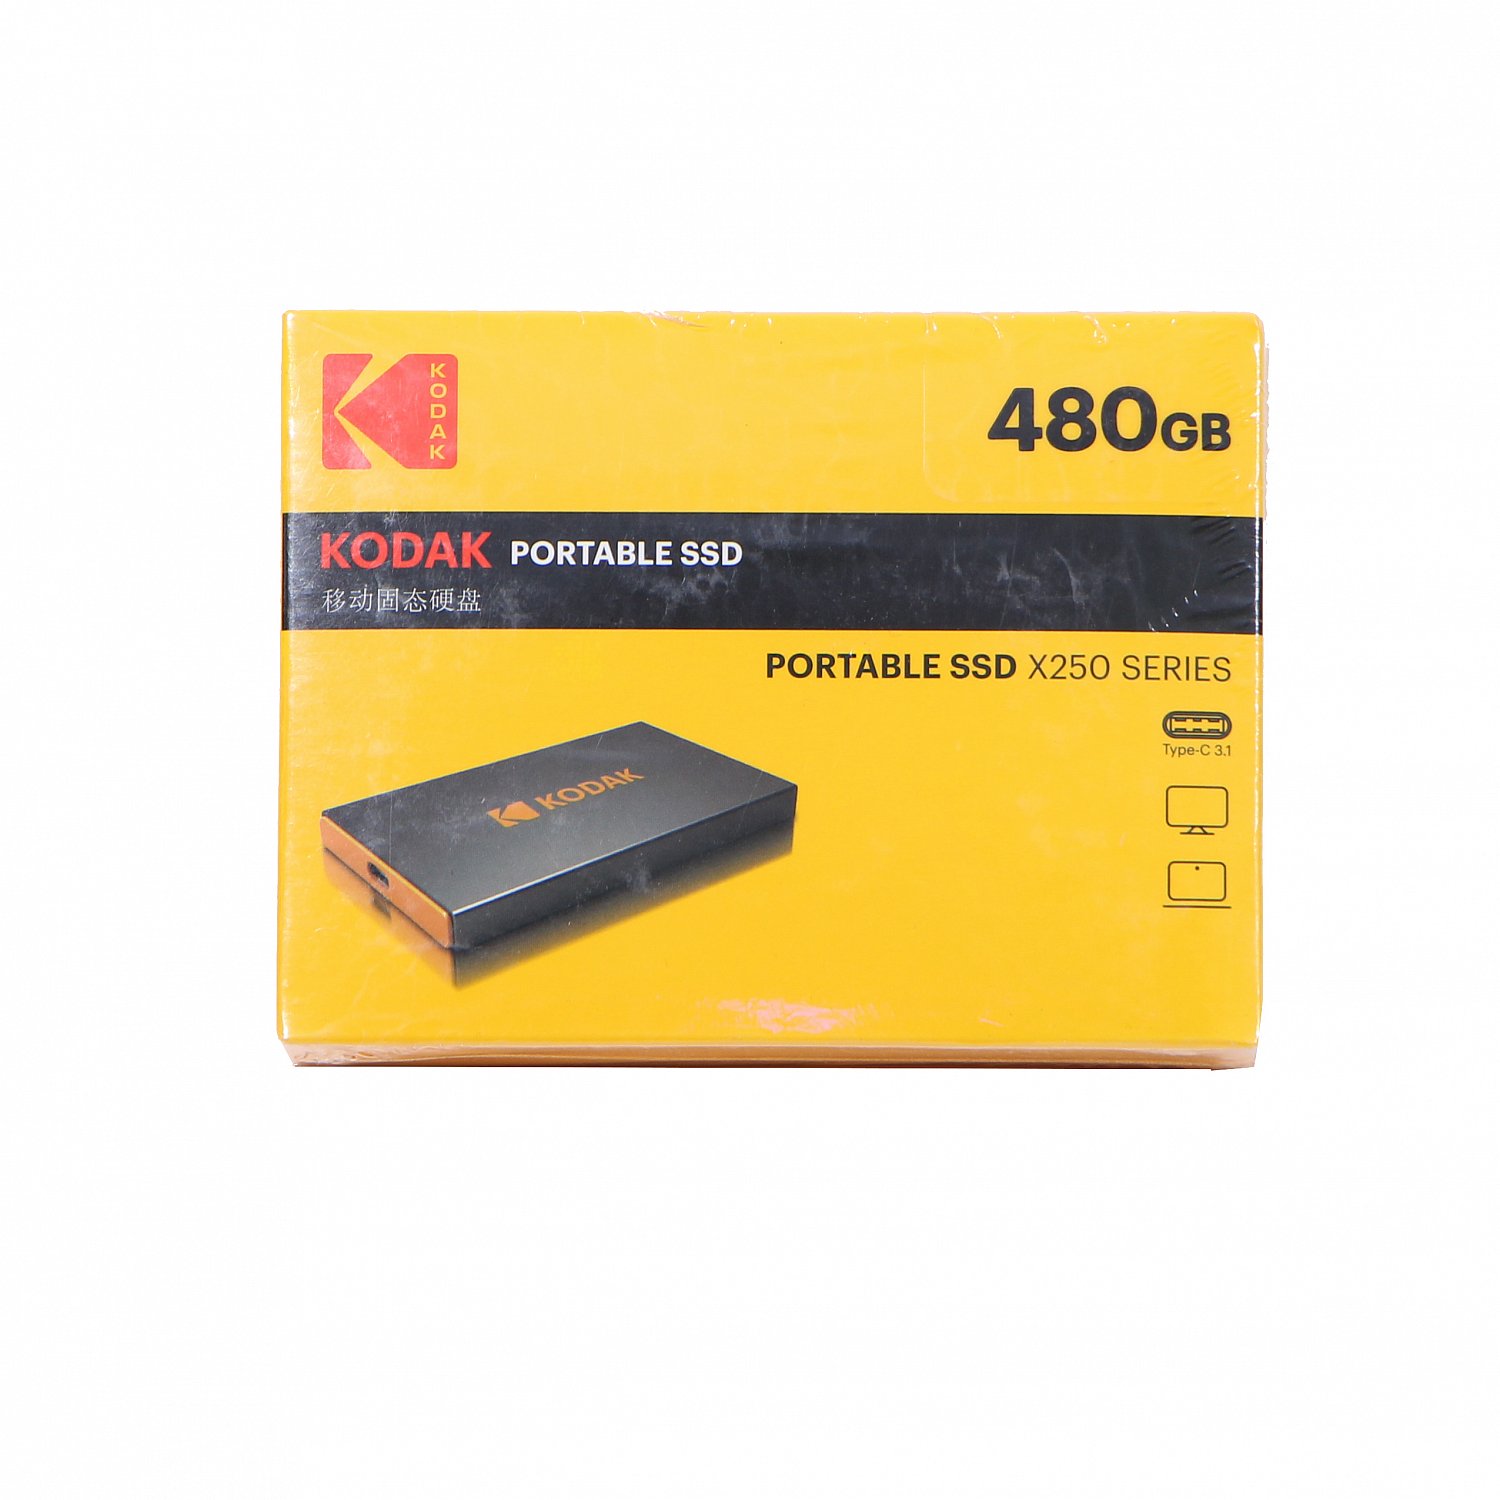 Portable SSD Kodak 480Gb | SSD480GBPORTABLE.jpg